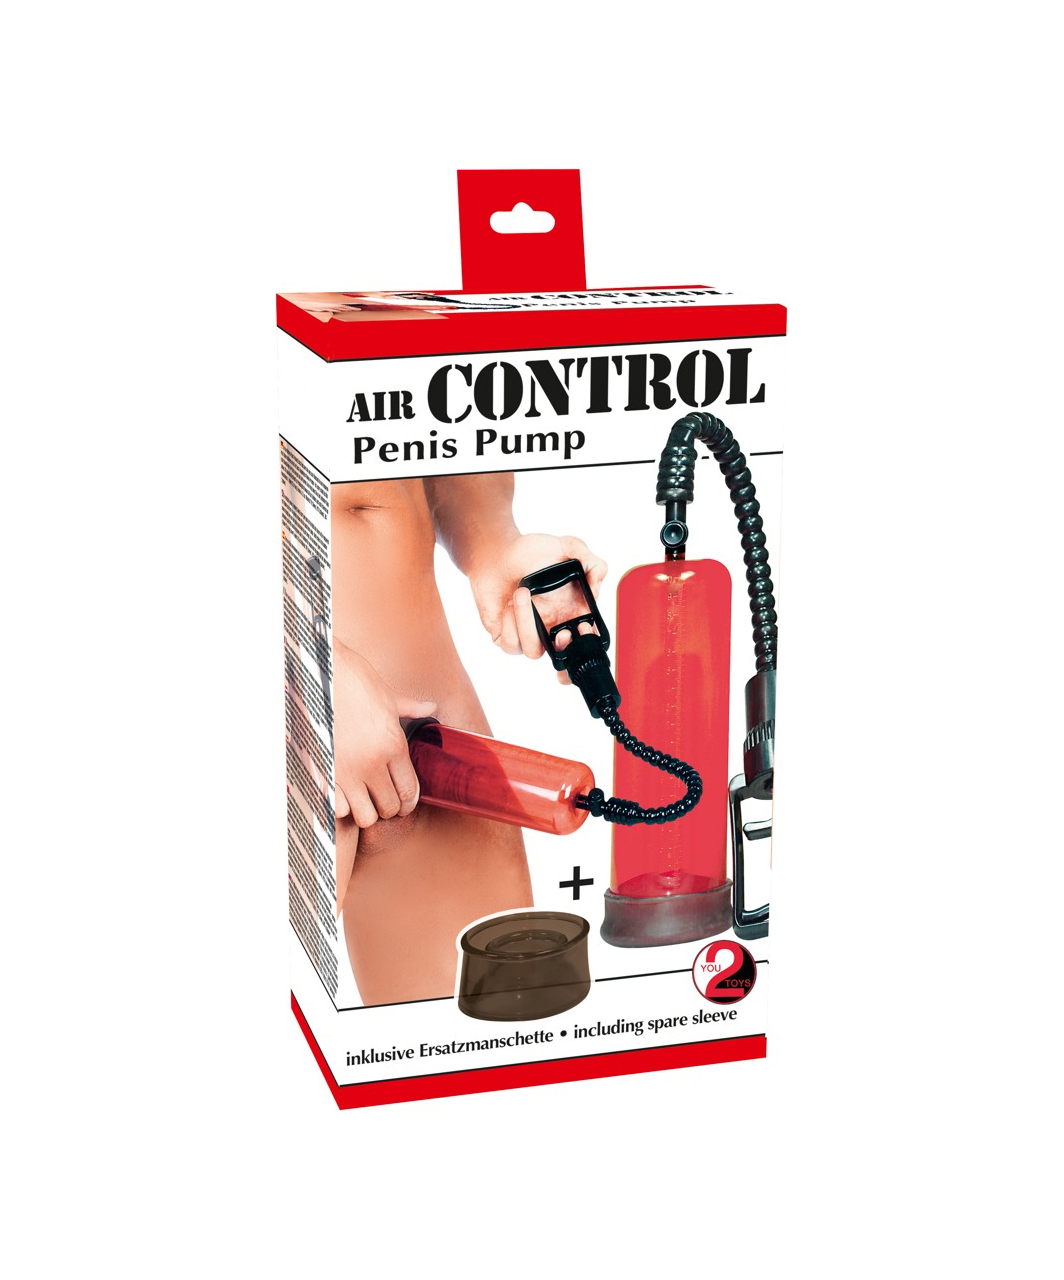 You2Toys Air Control penis pump